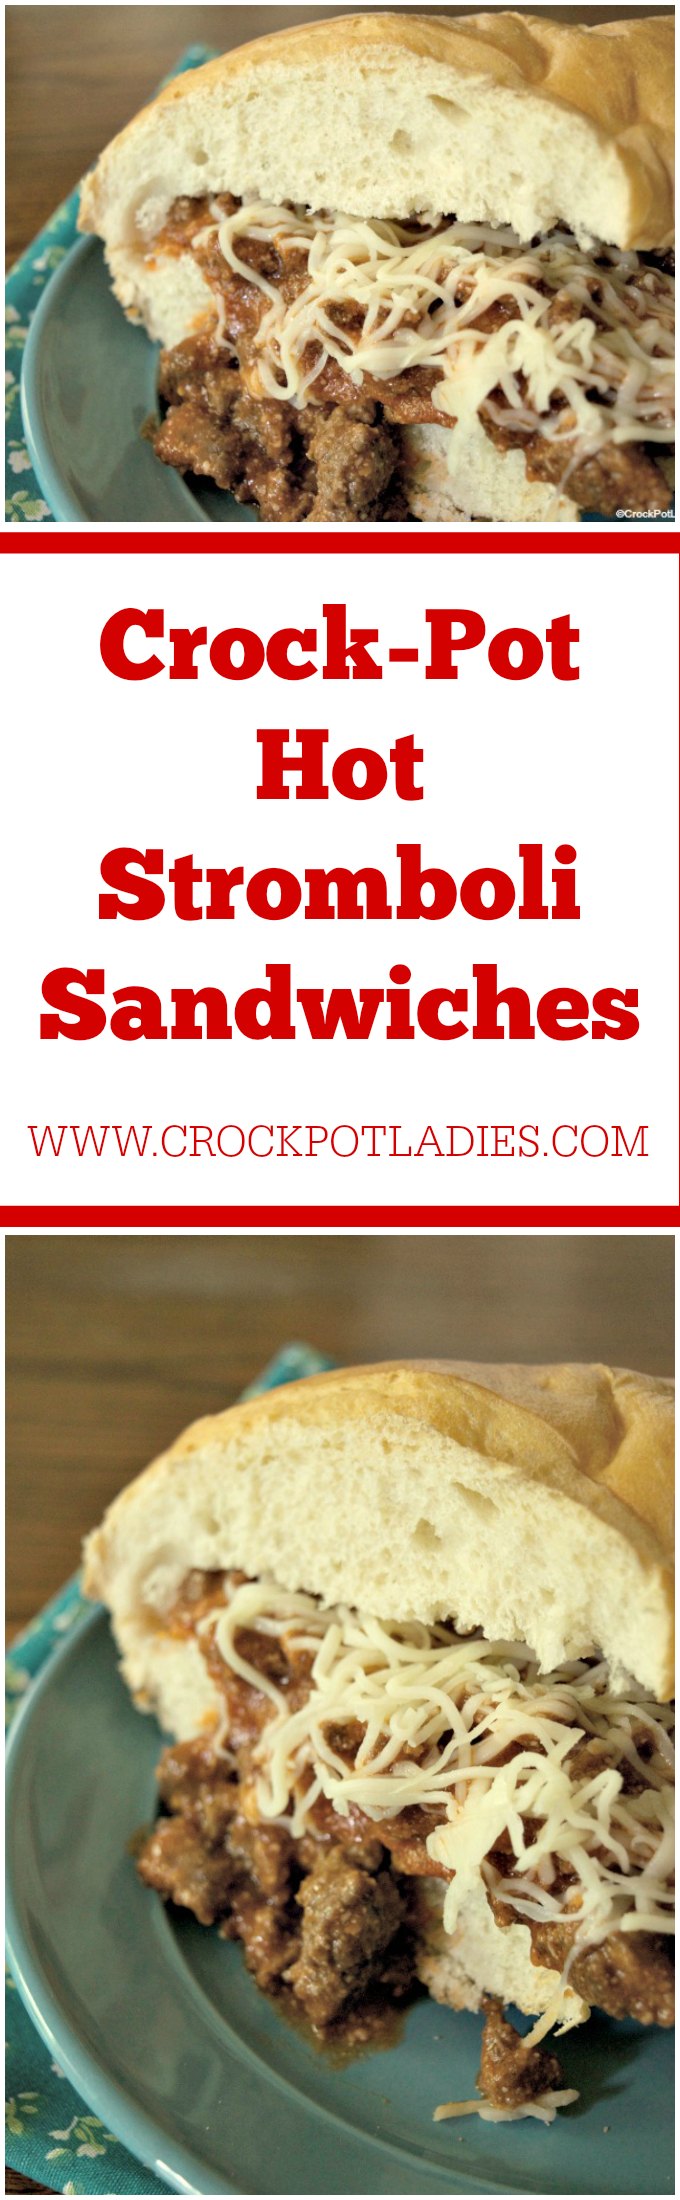 Crock-Pot Hot Stromboli Sandwiches